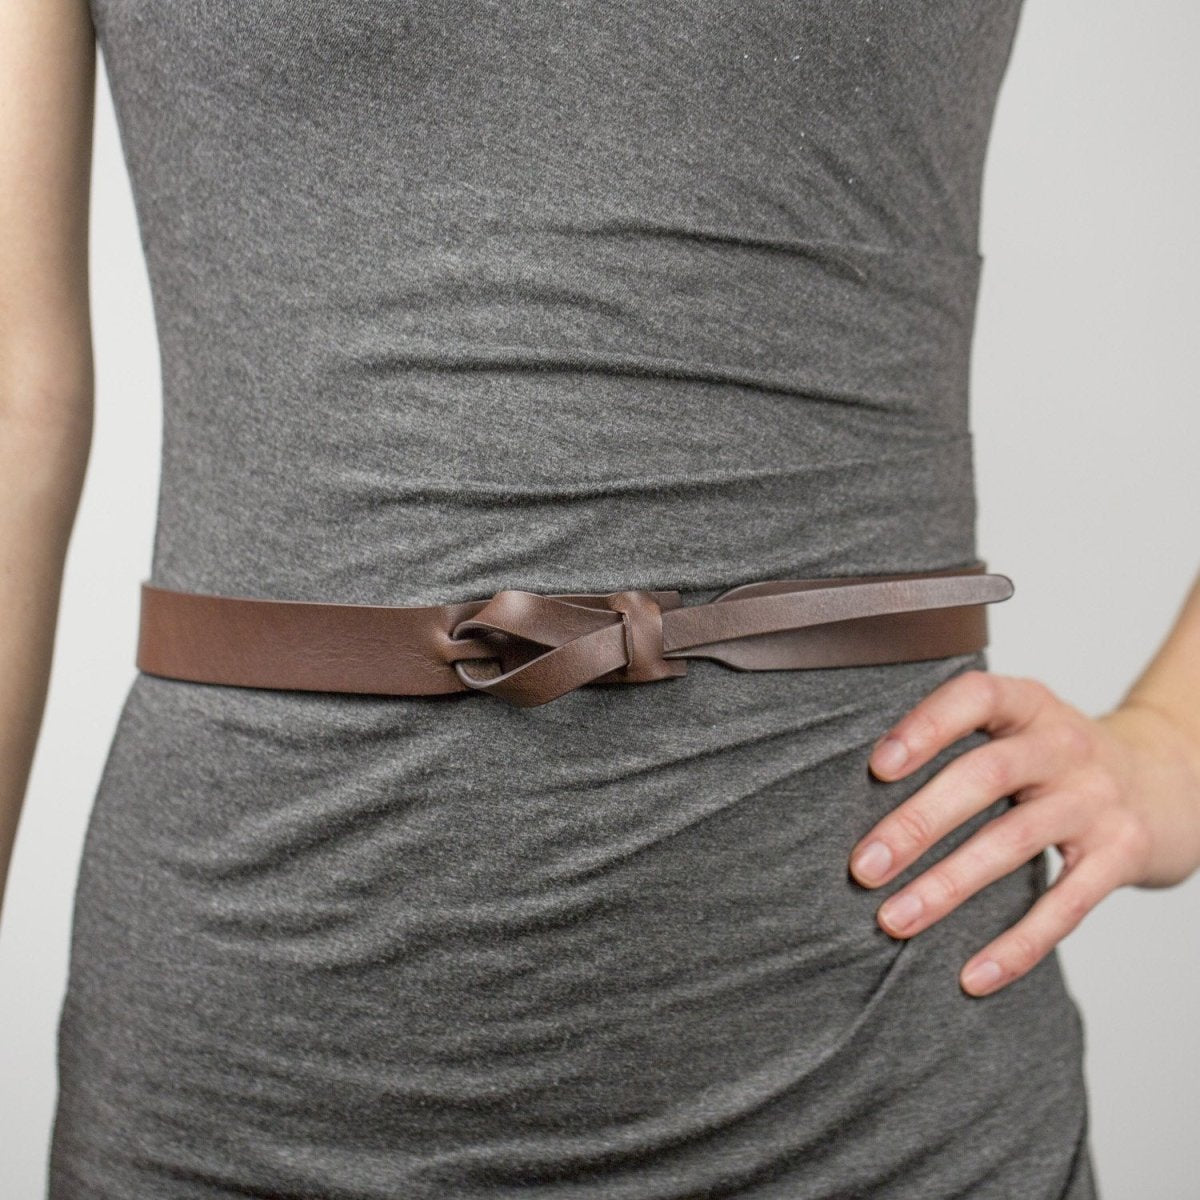 Buckleless Brown Leather Belt - 1"